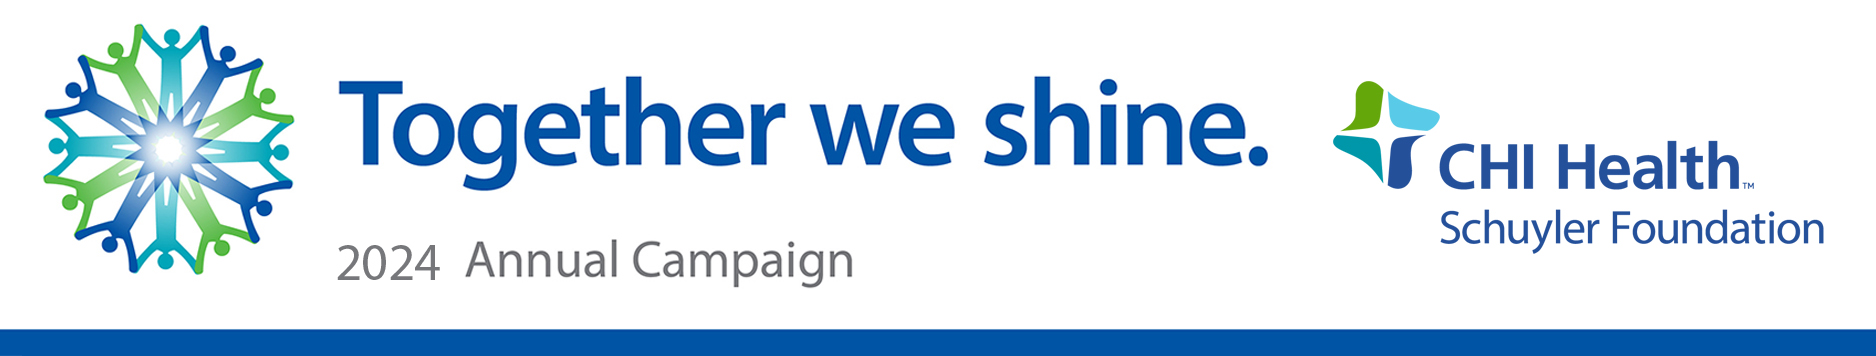 CHI Health Schuyler Together We Shine Campaign Banner